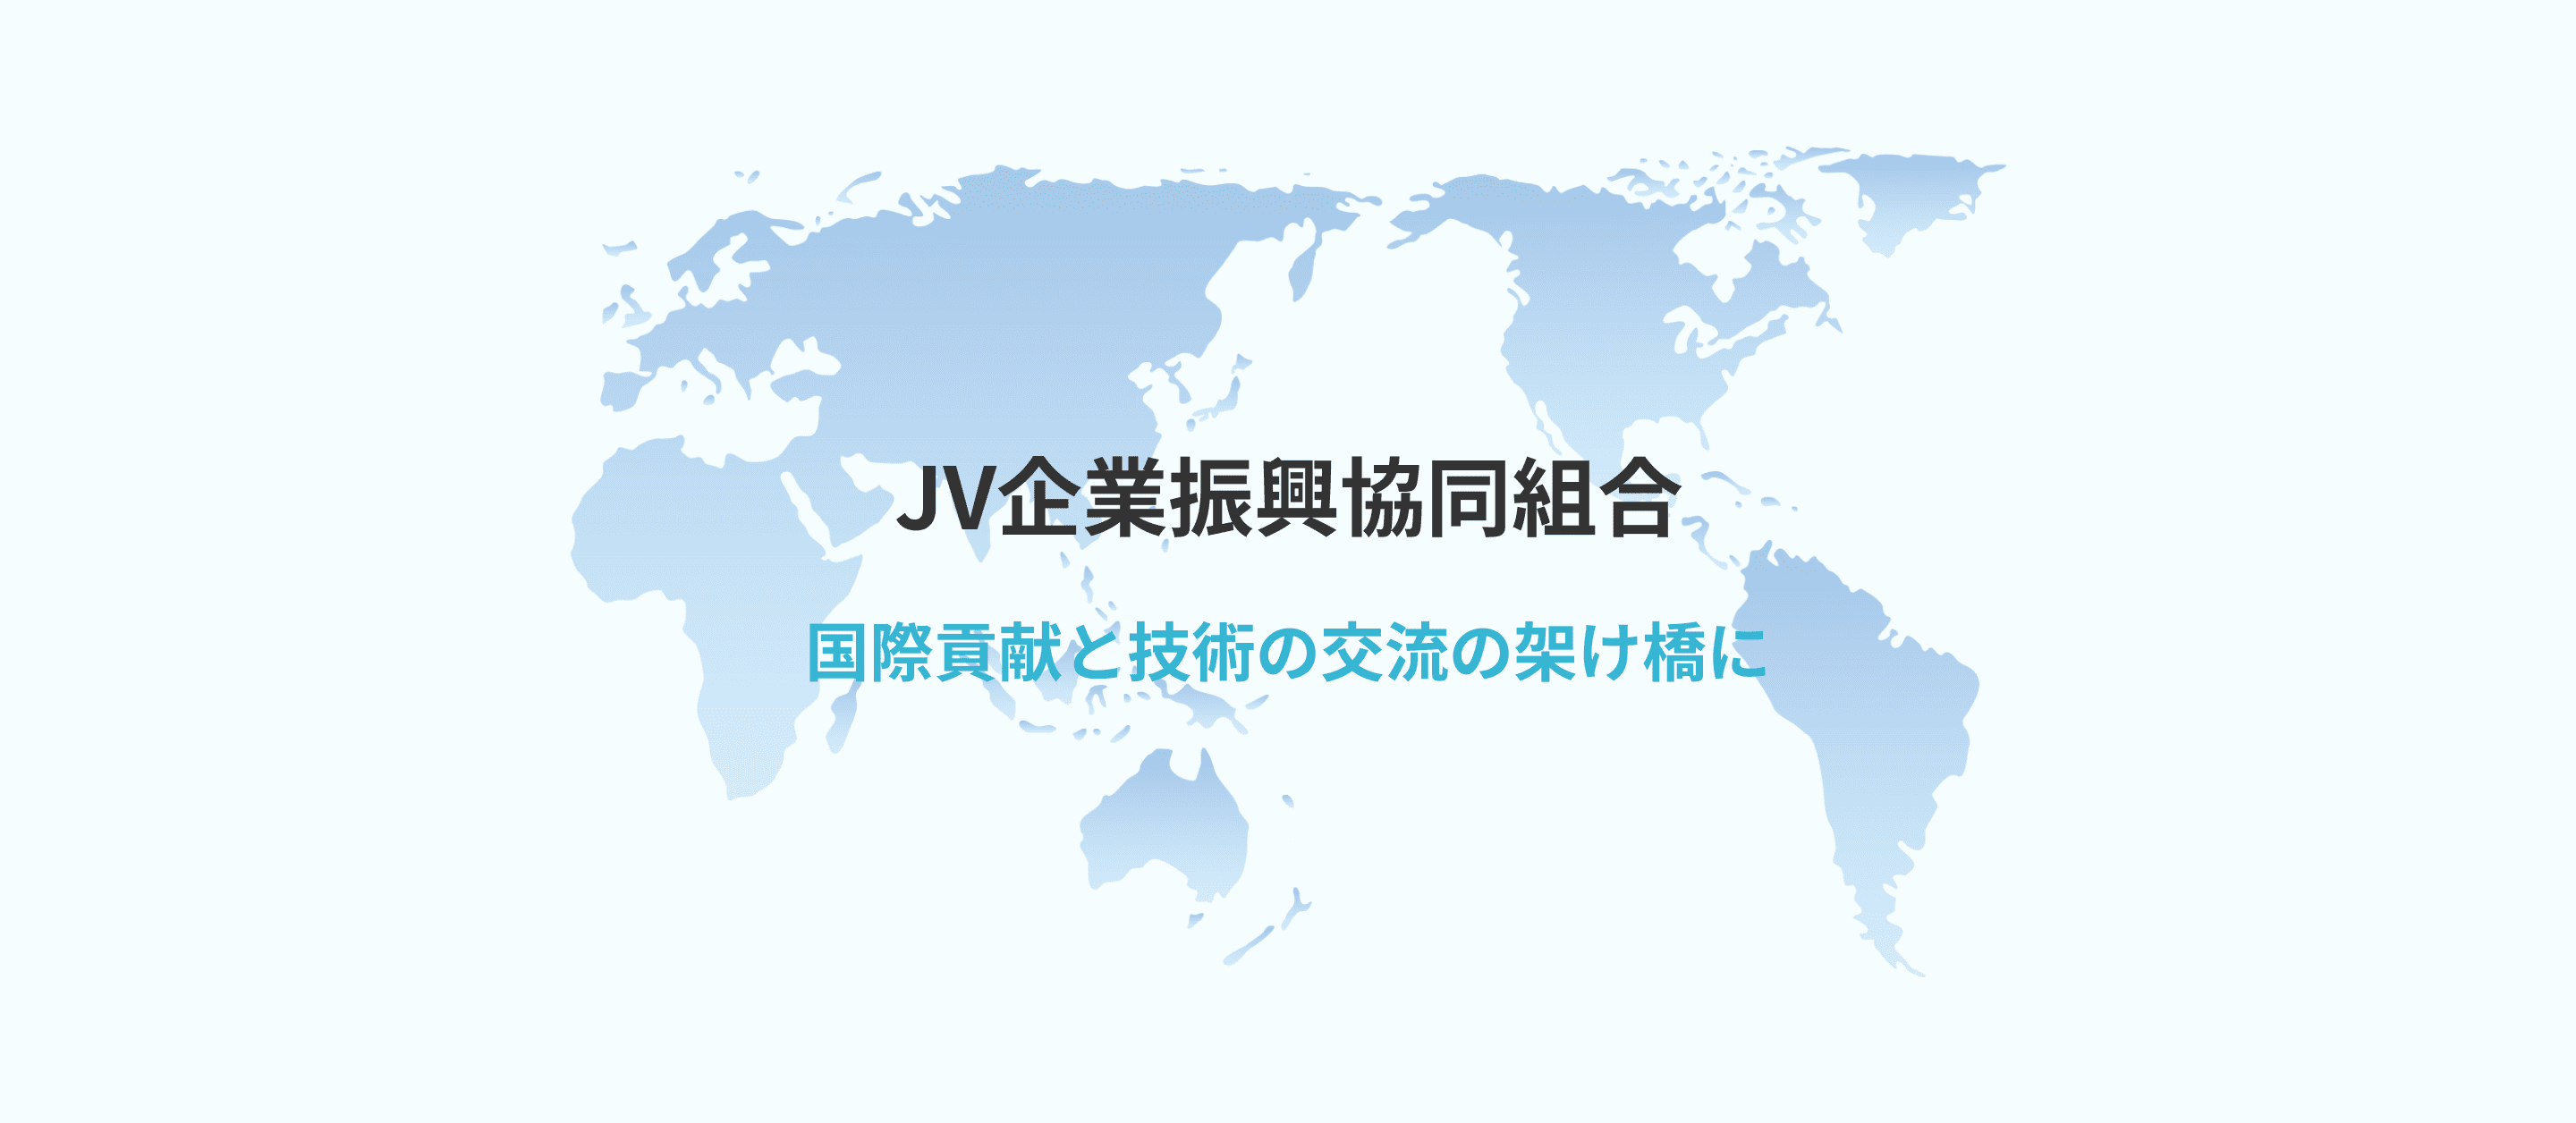 JV企業振興協同組合　～国際貢献と技術交流の架け橋に～